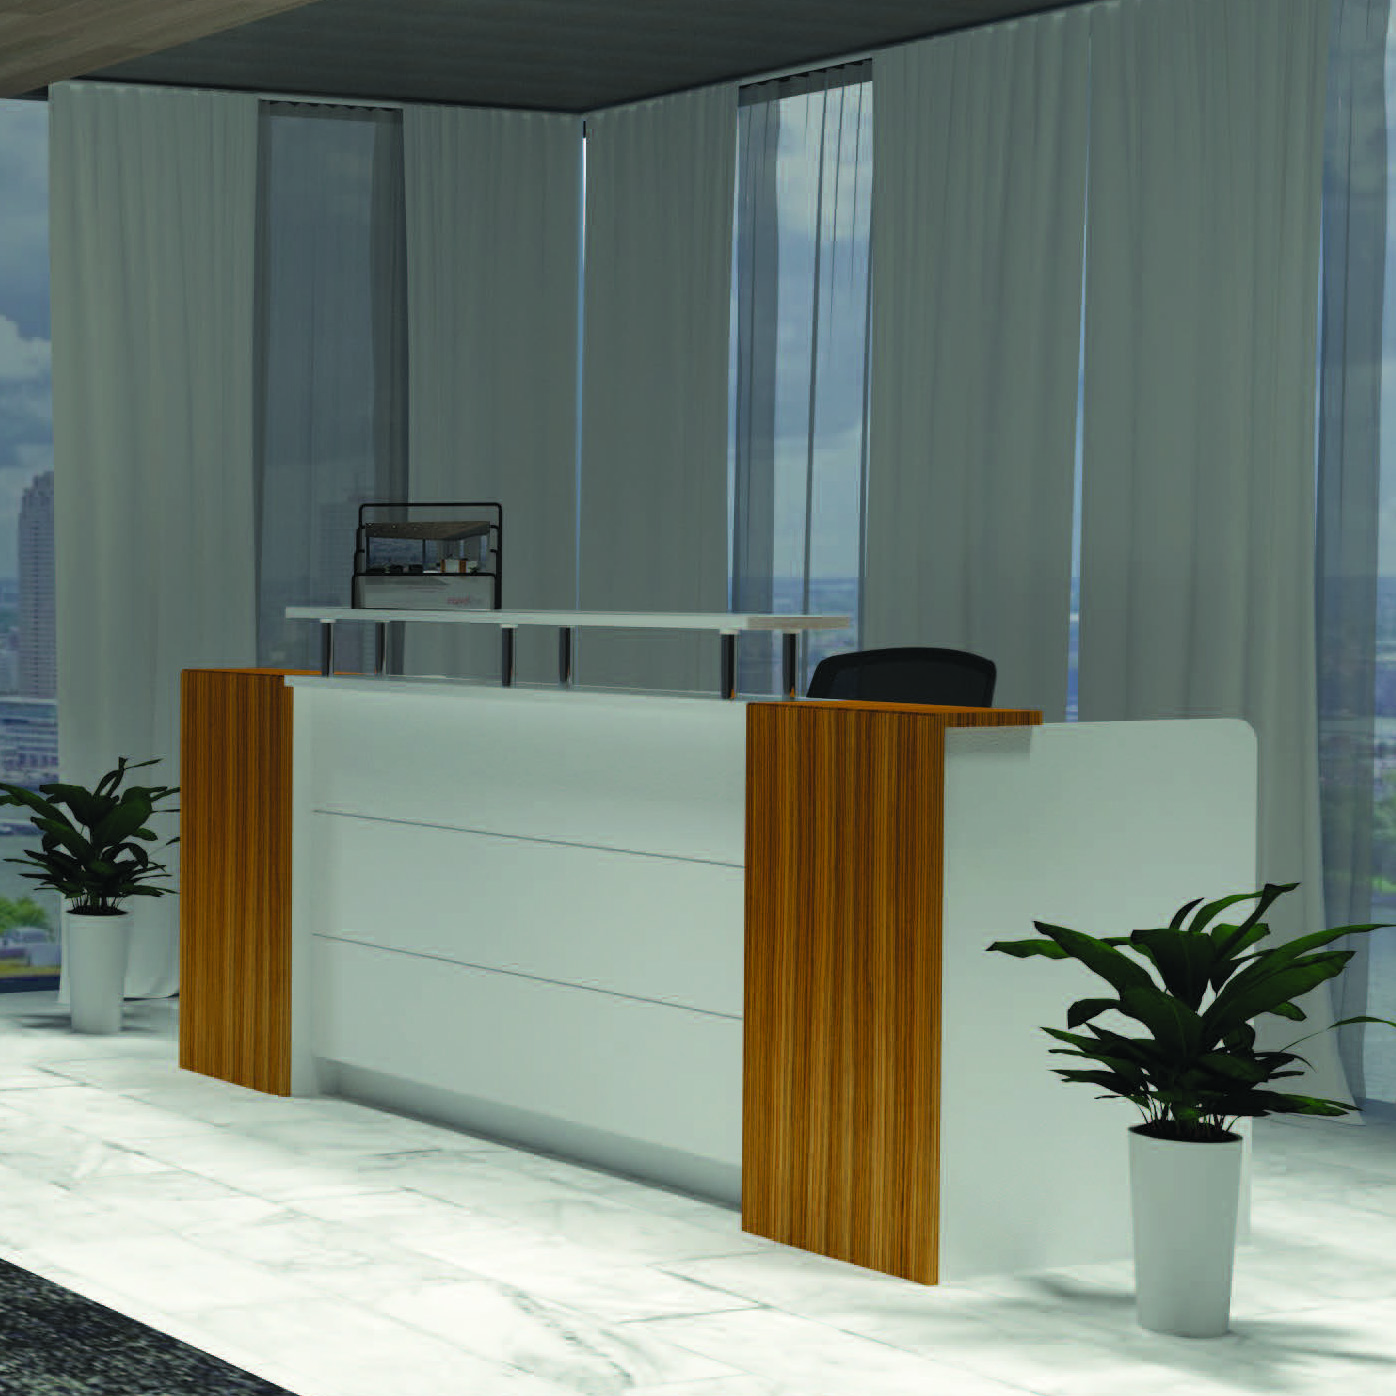 Rapidline Marquee Reception Desk Officeway Office Furniture